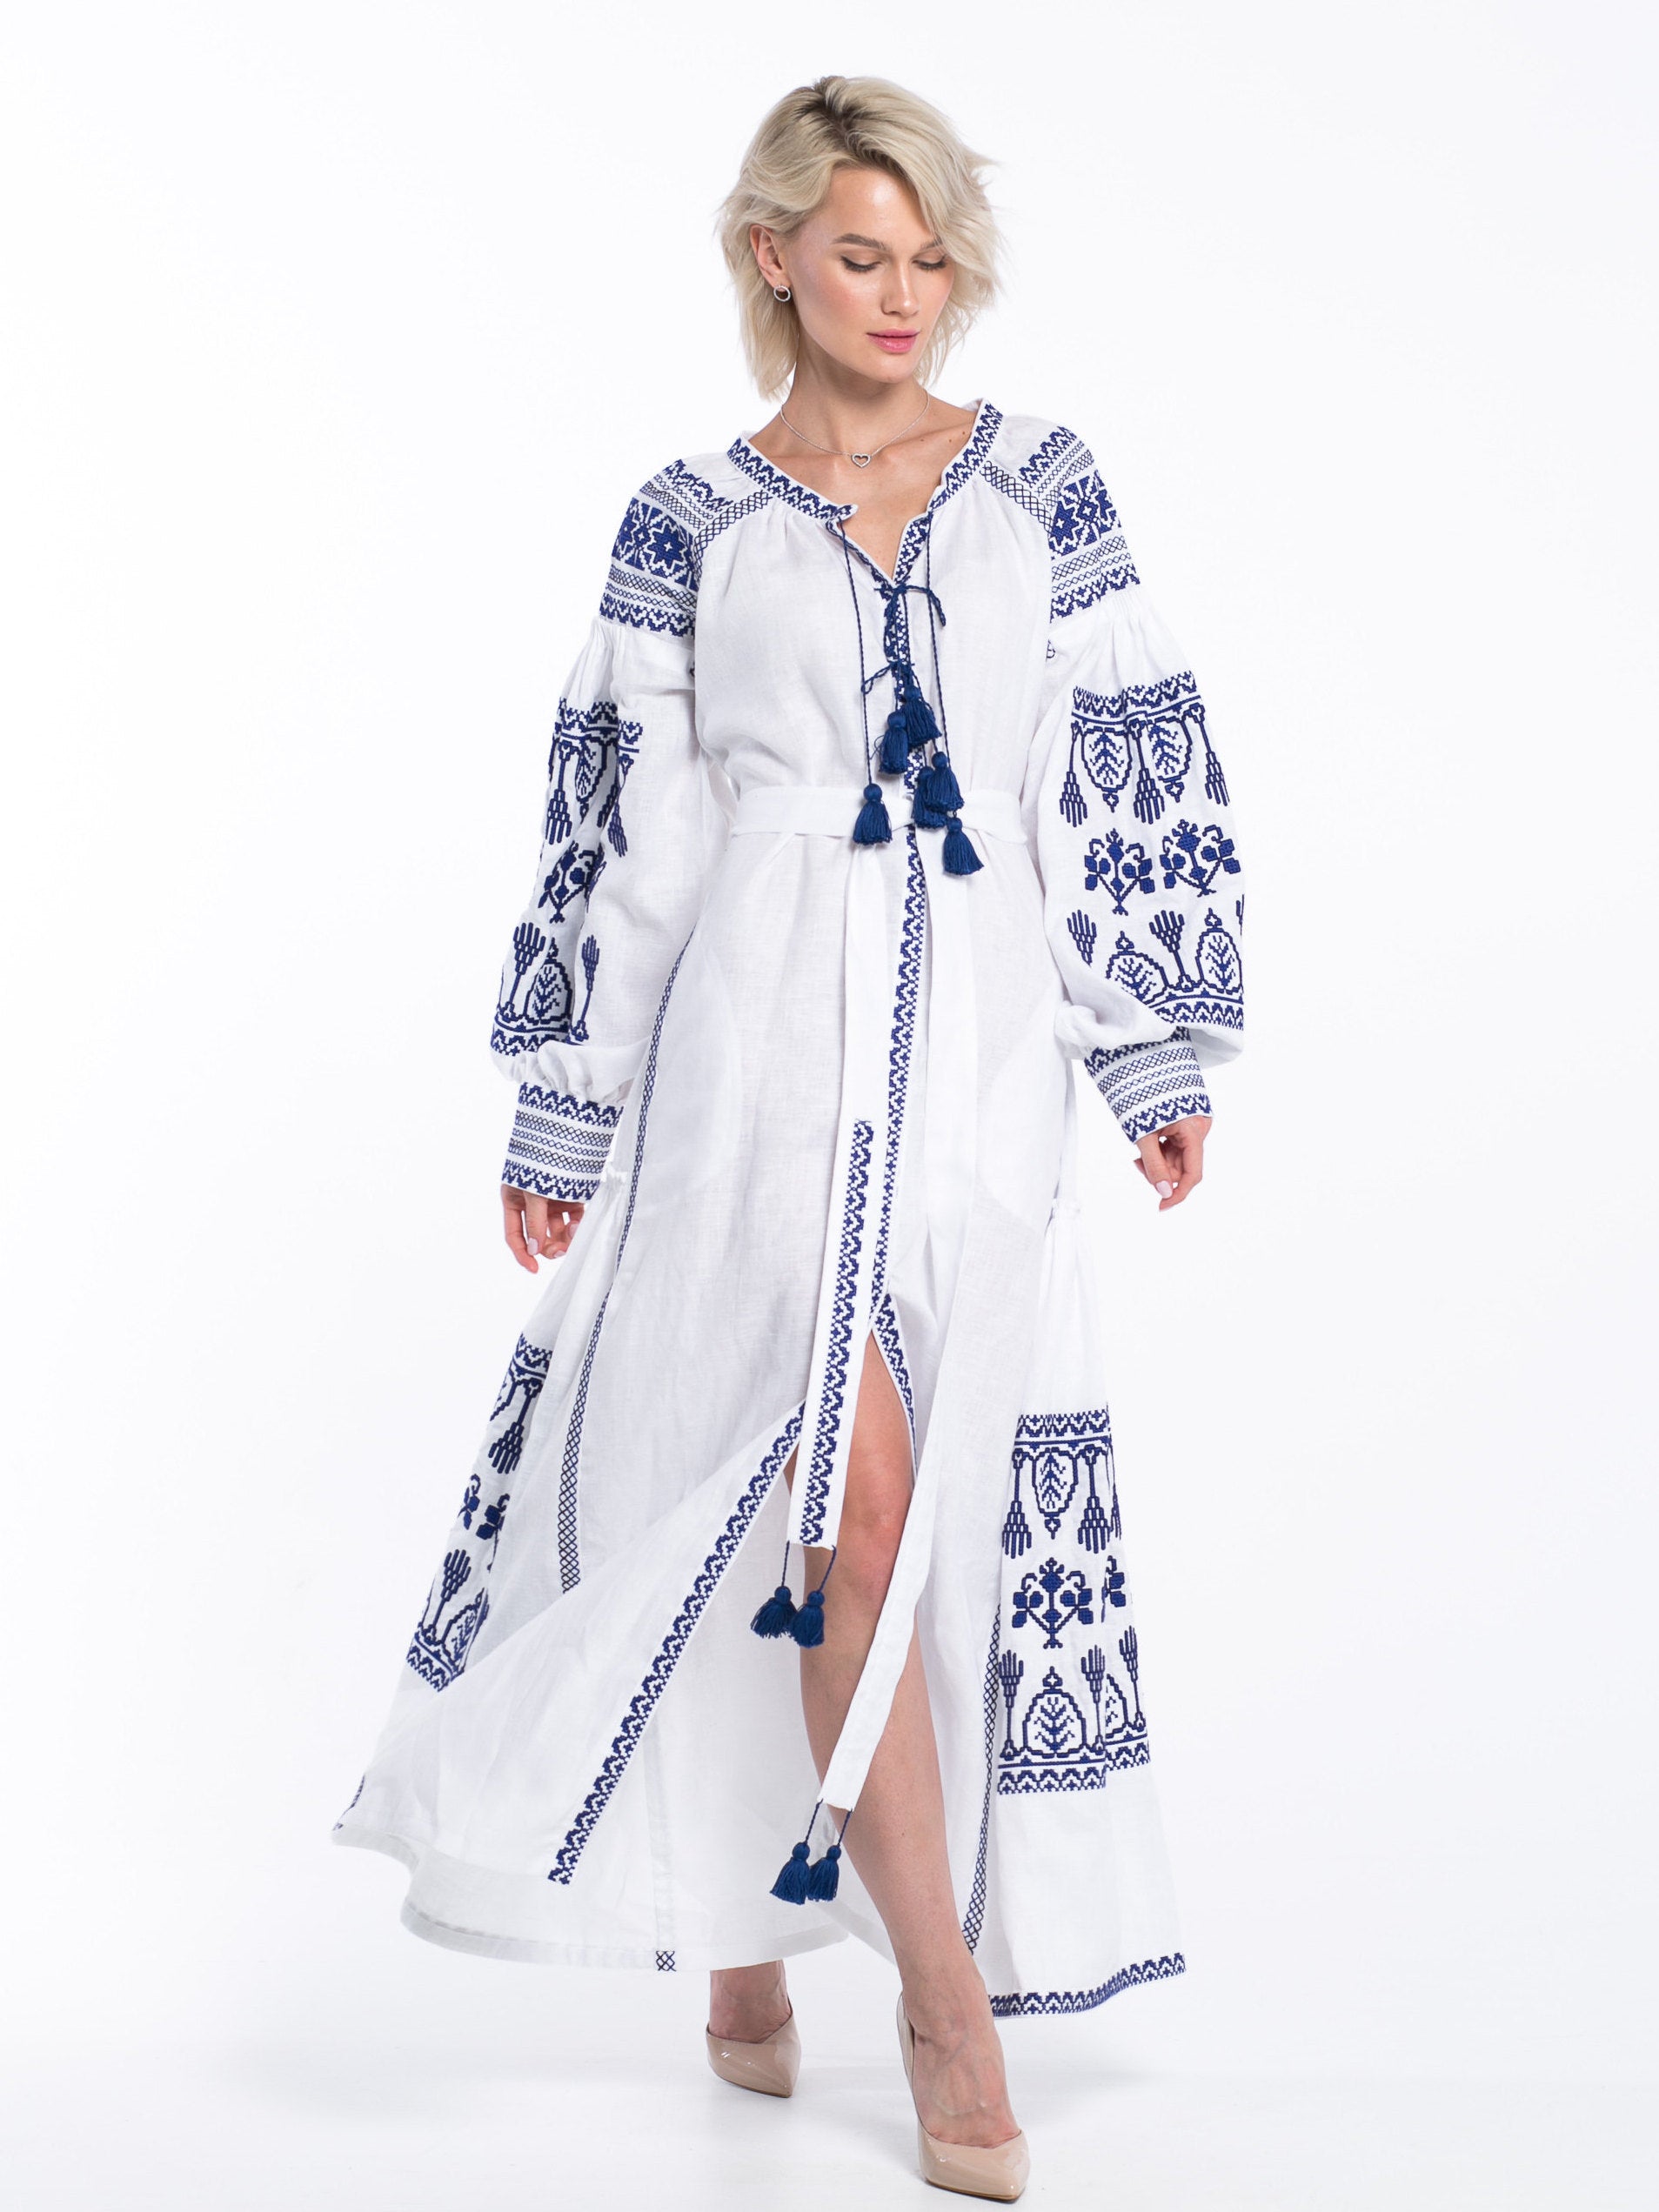 Fashion embroidered wedding dress Ukrainian vyshyvanka robe